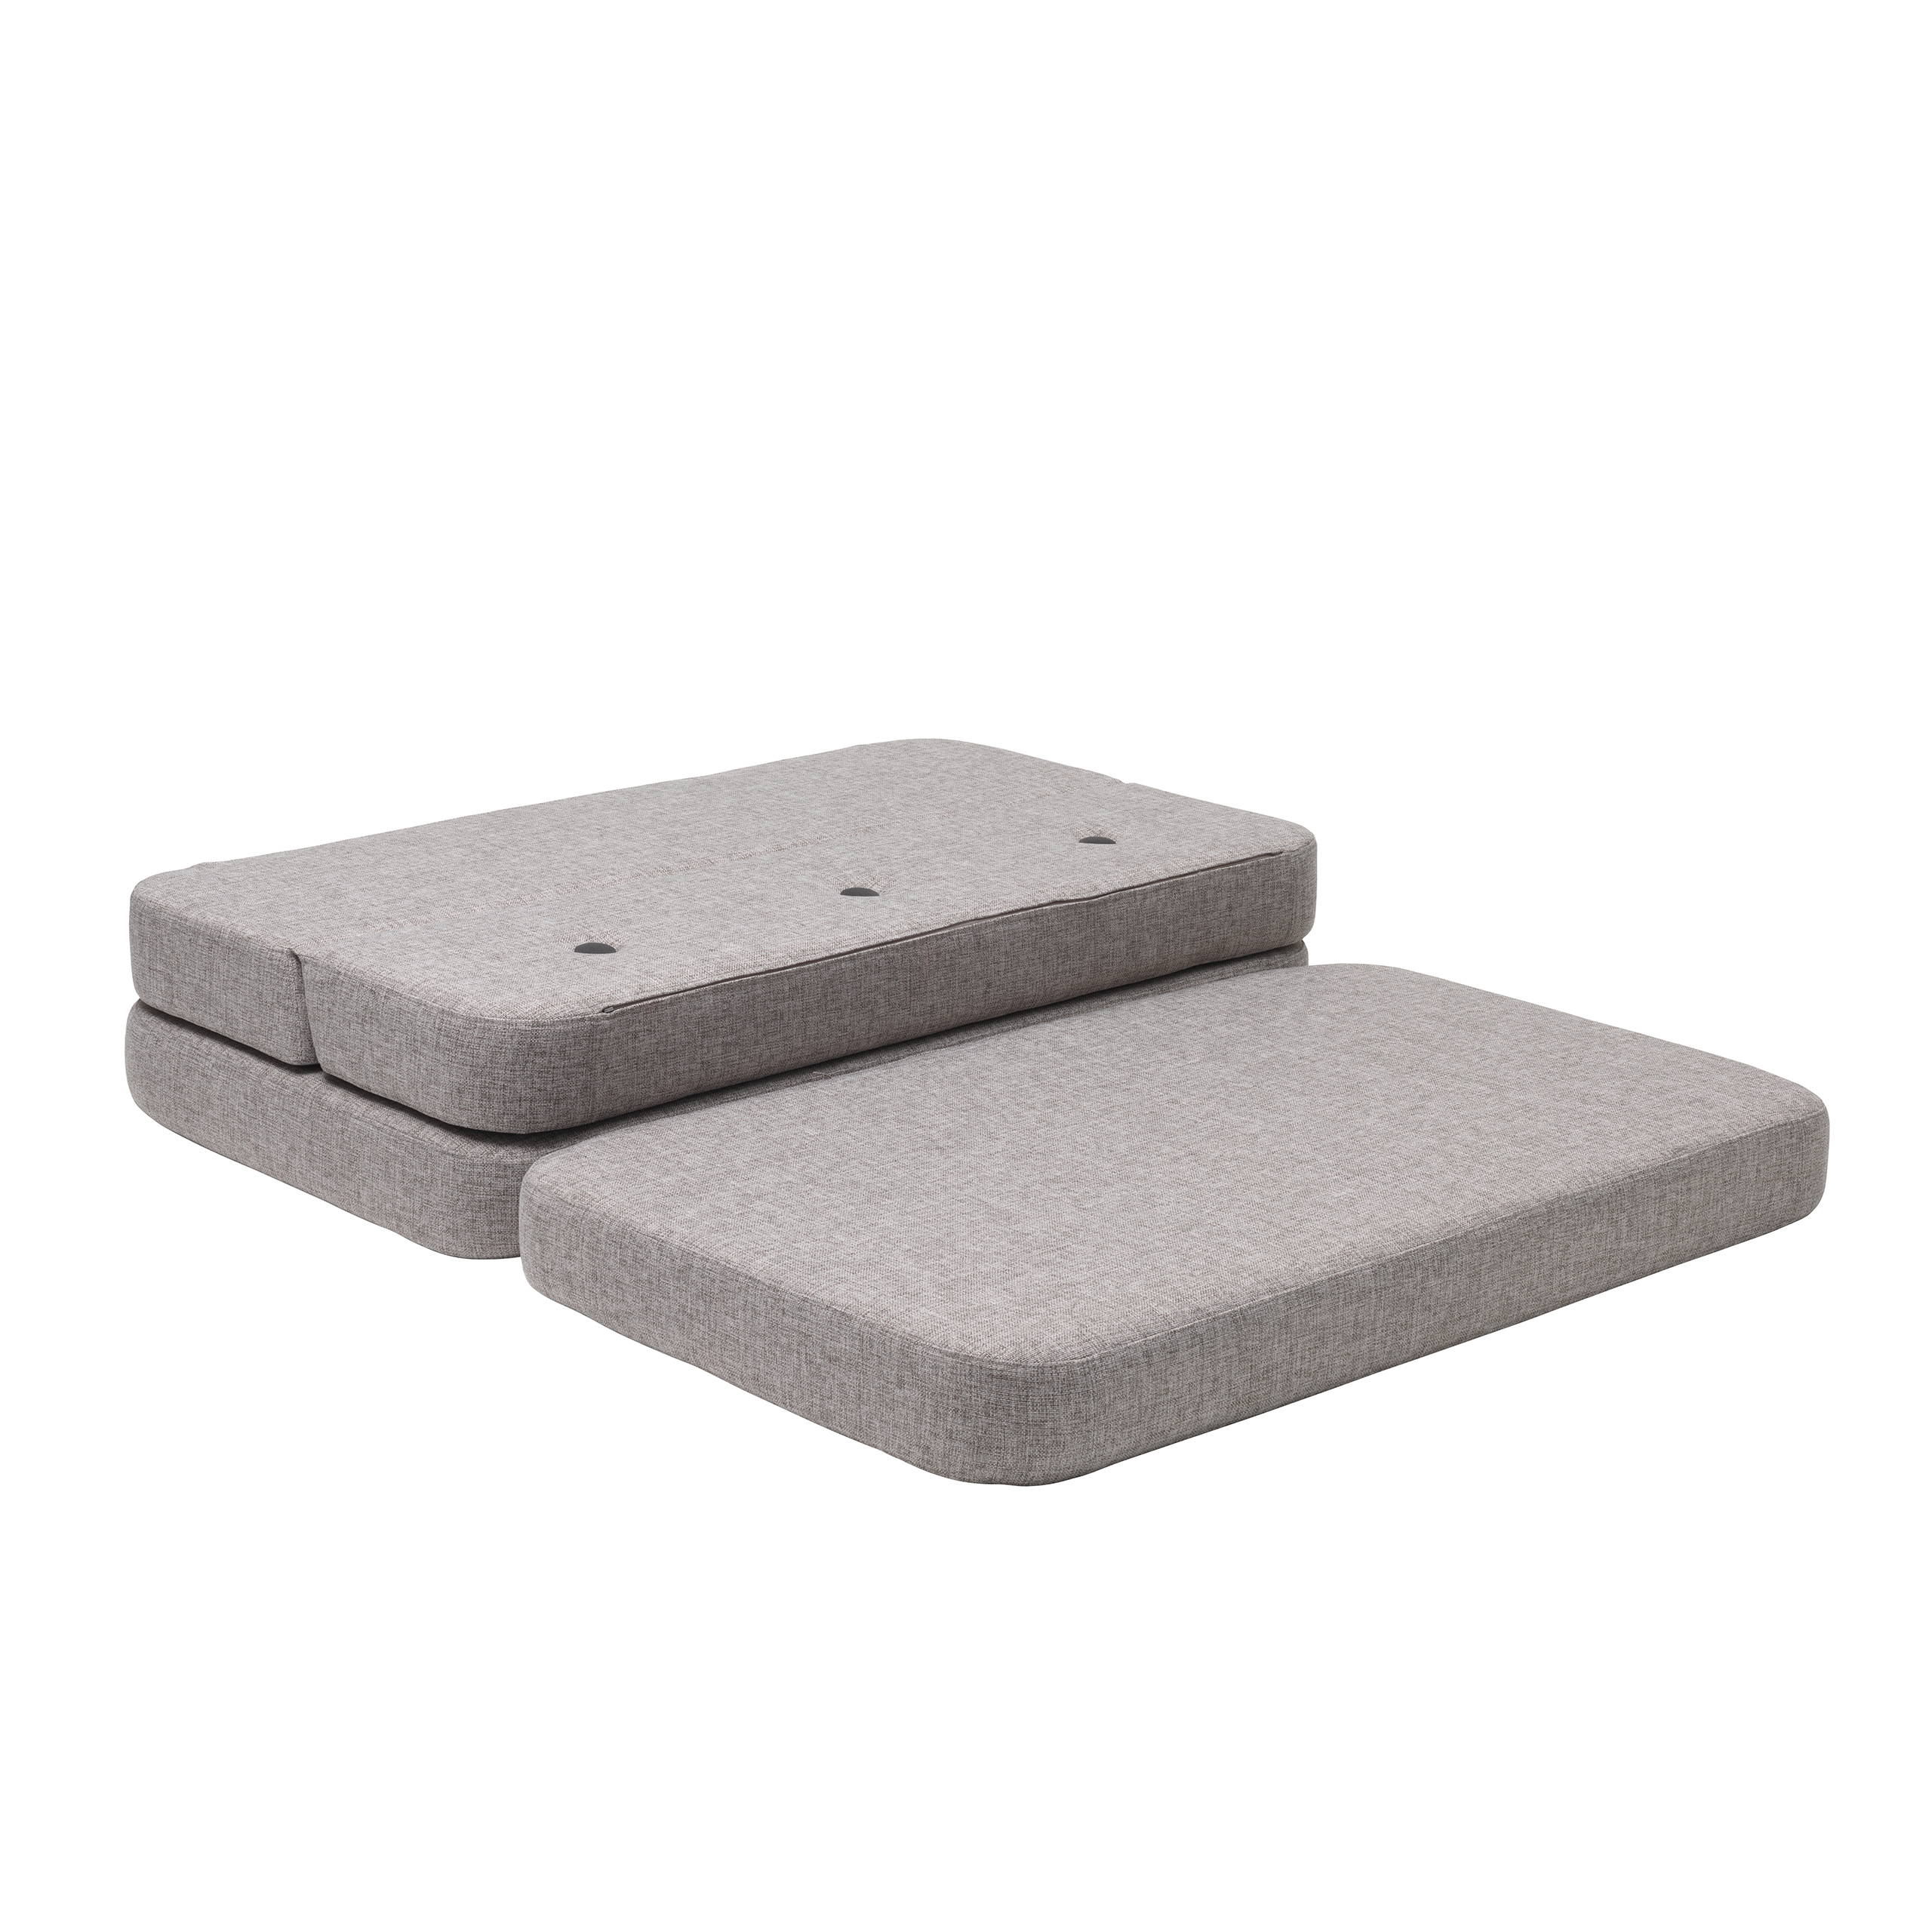 Klapp-Sofa "KK 3 Fold Sofa" (120 cm) -  Multi Grey / Grey